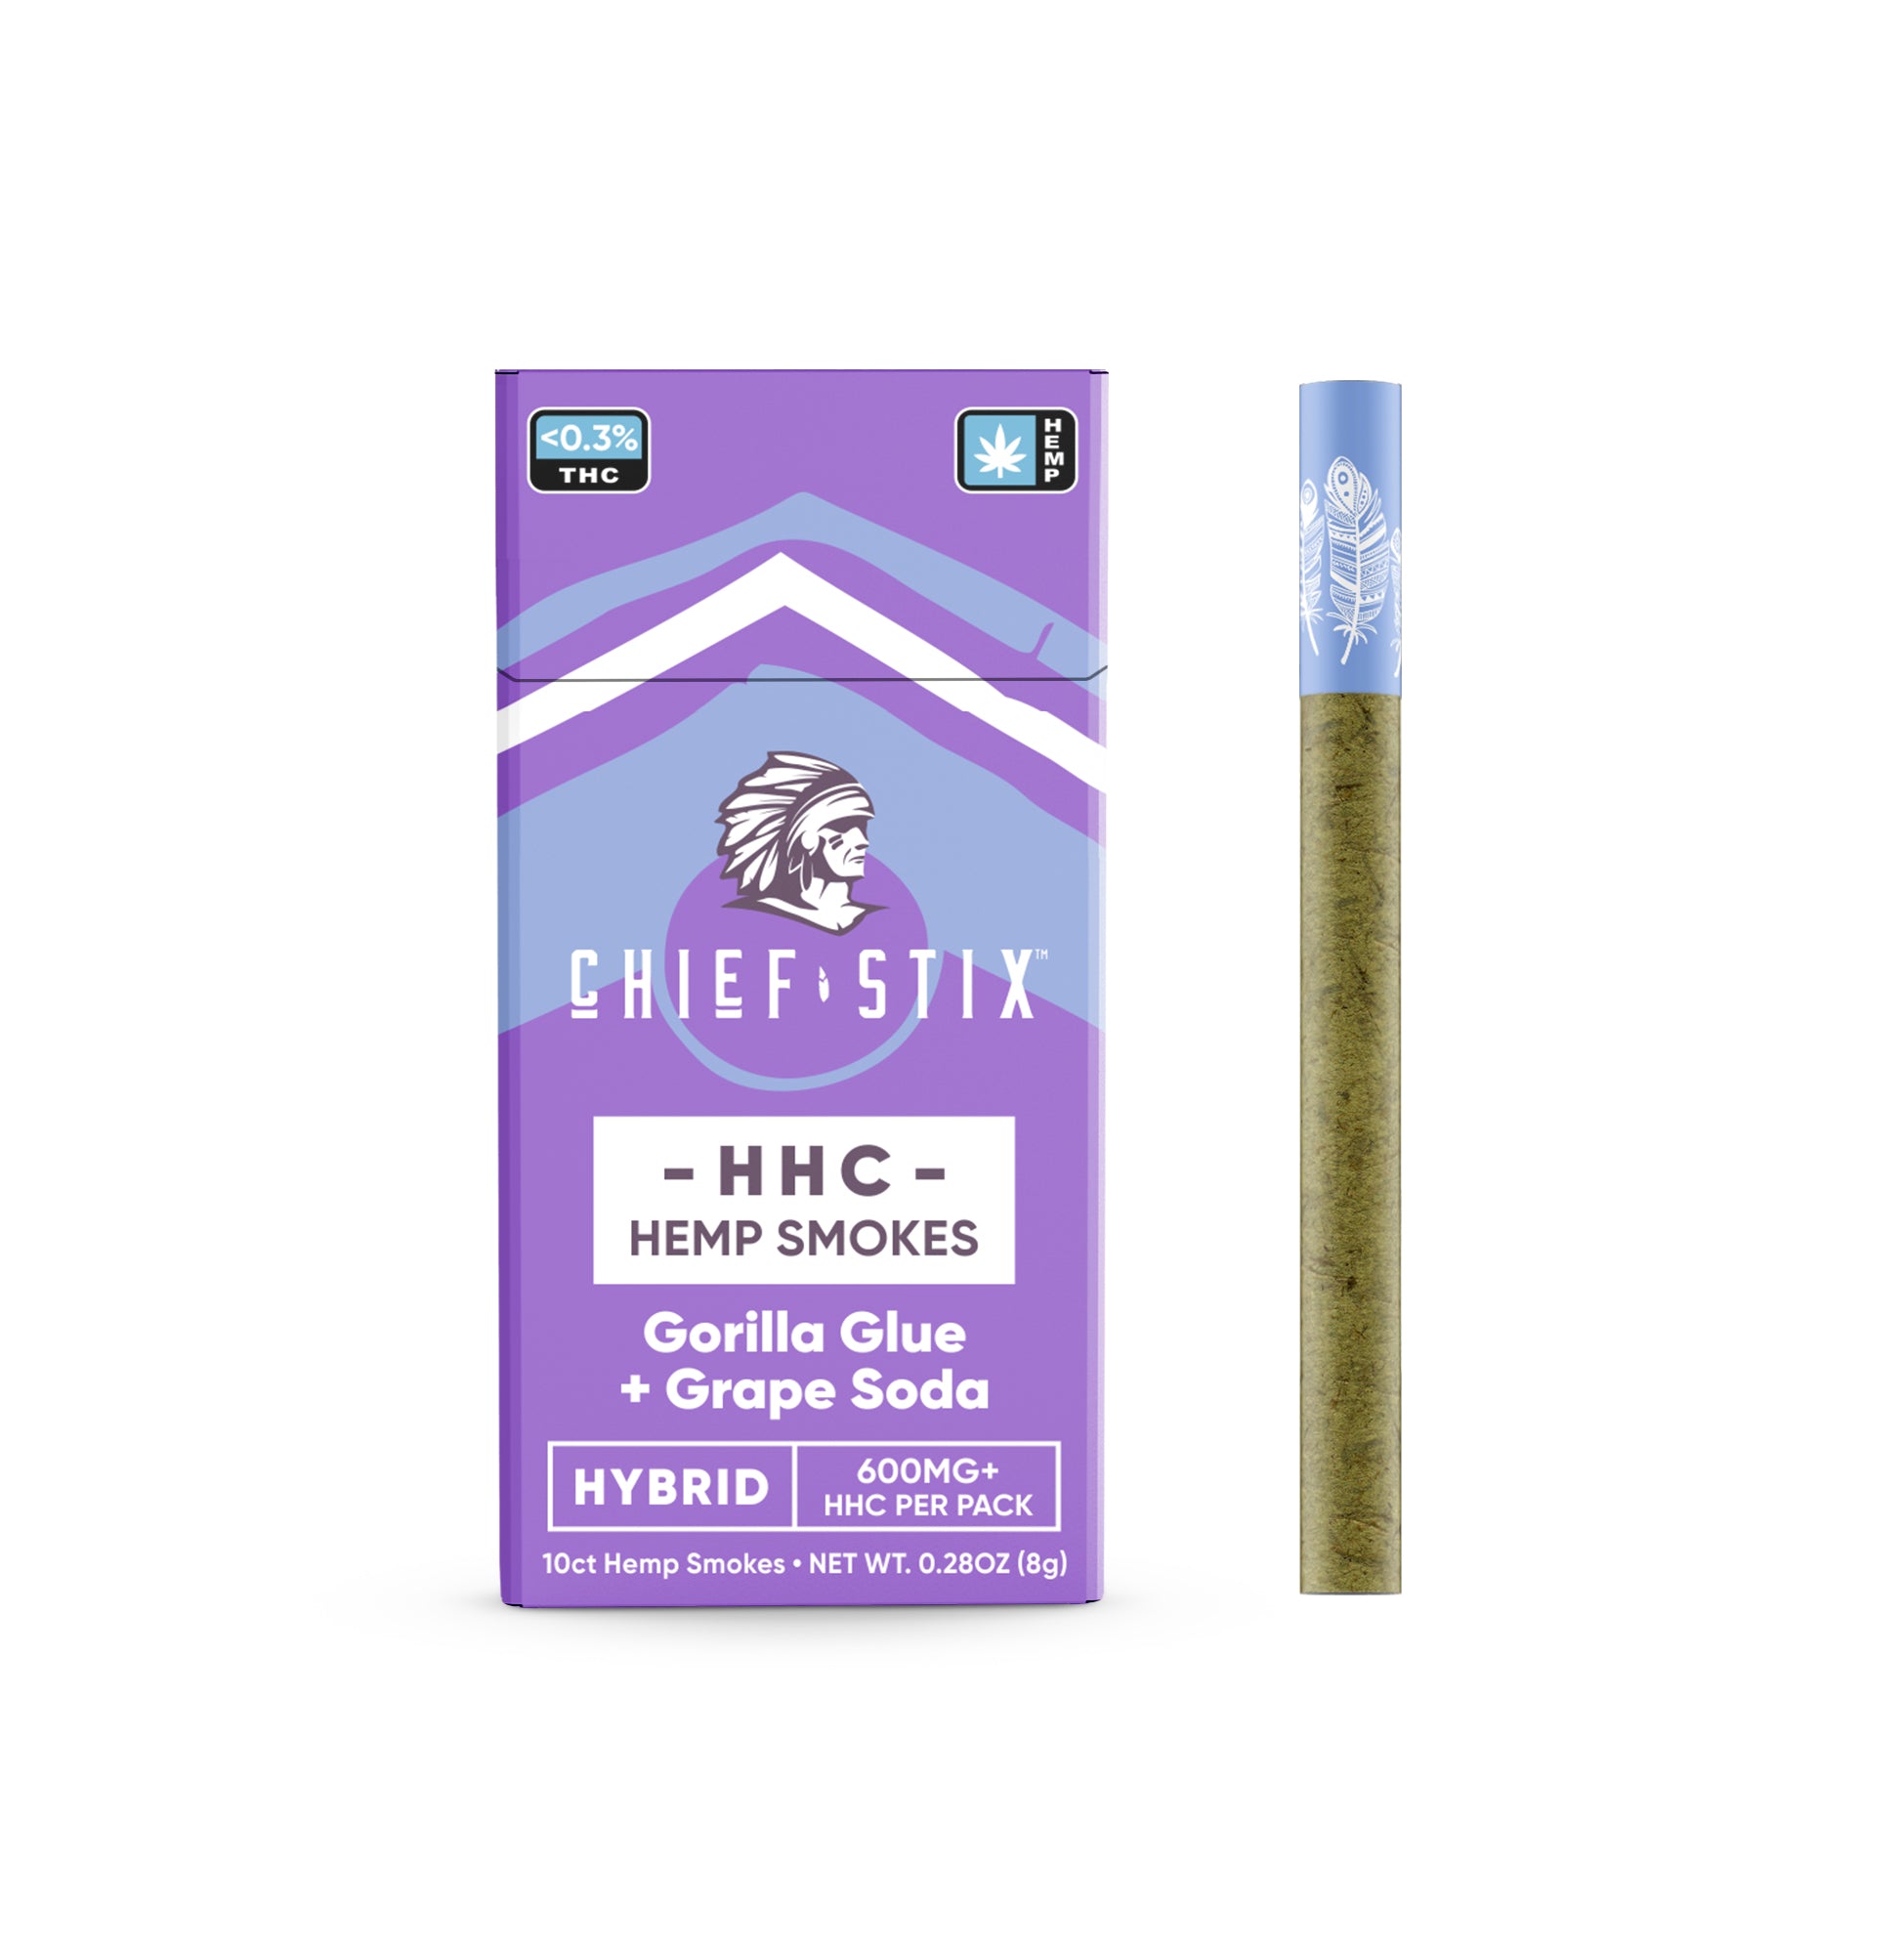 Chief Stix HHC Infused Hemp Smokes Gorilla Glue + Grape Soda Hybrid 600mg (10ct) - Carton